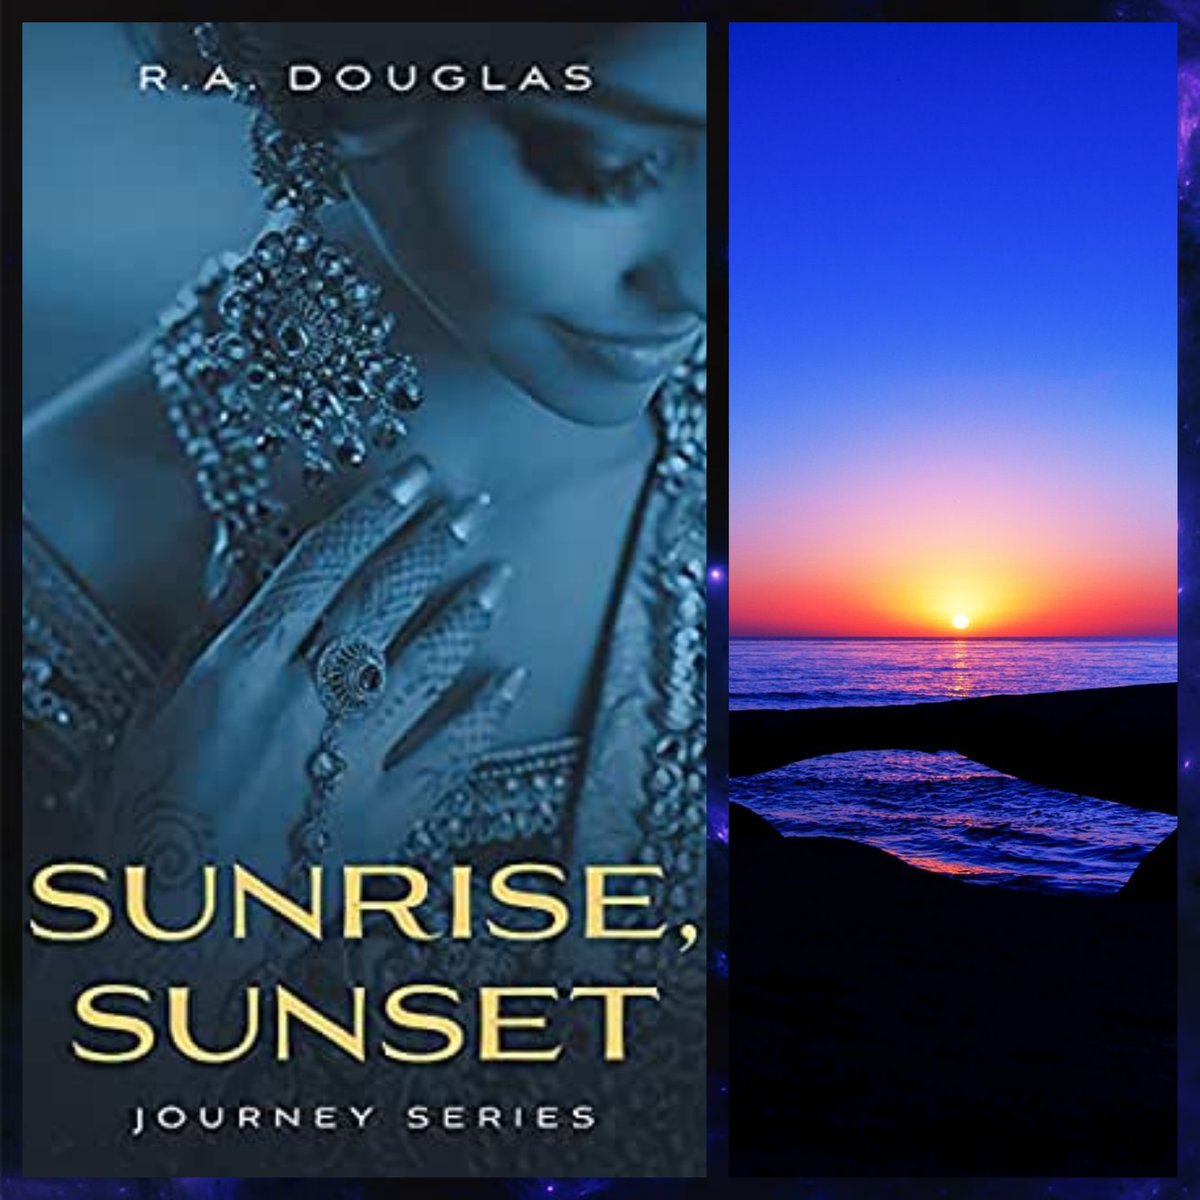 ⭐️⭐️⭐️⭐️ 4 well deserved stars from me for Sunrise, Sunset by R.A. Douglas ♥️ goodreads.com/review/show/42… #RADouglas #SunriseSunset #BookAddict #LoveBooks #DebutNovel #BookBlogger #AddictedToReading #NeverEnoughBooks #PassionForReading #Book #Read #Reviewer #BookReviewer